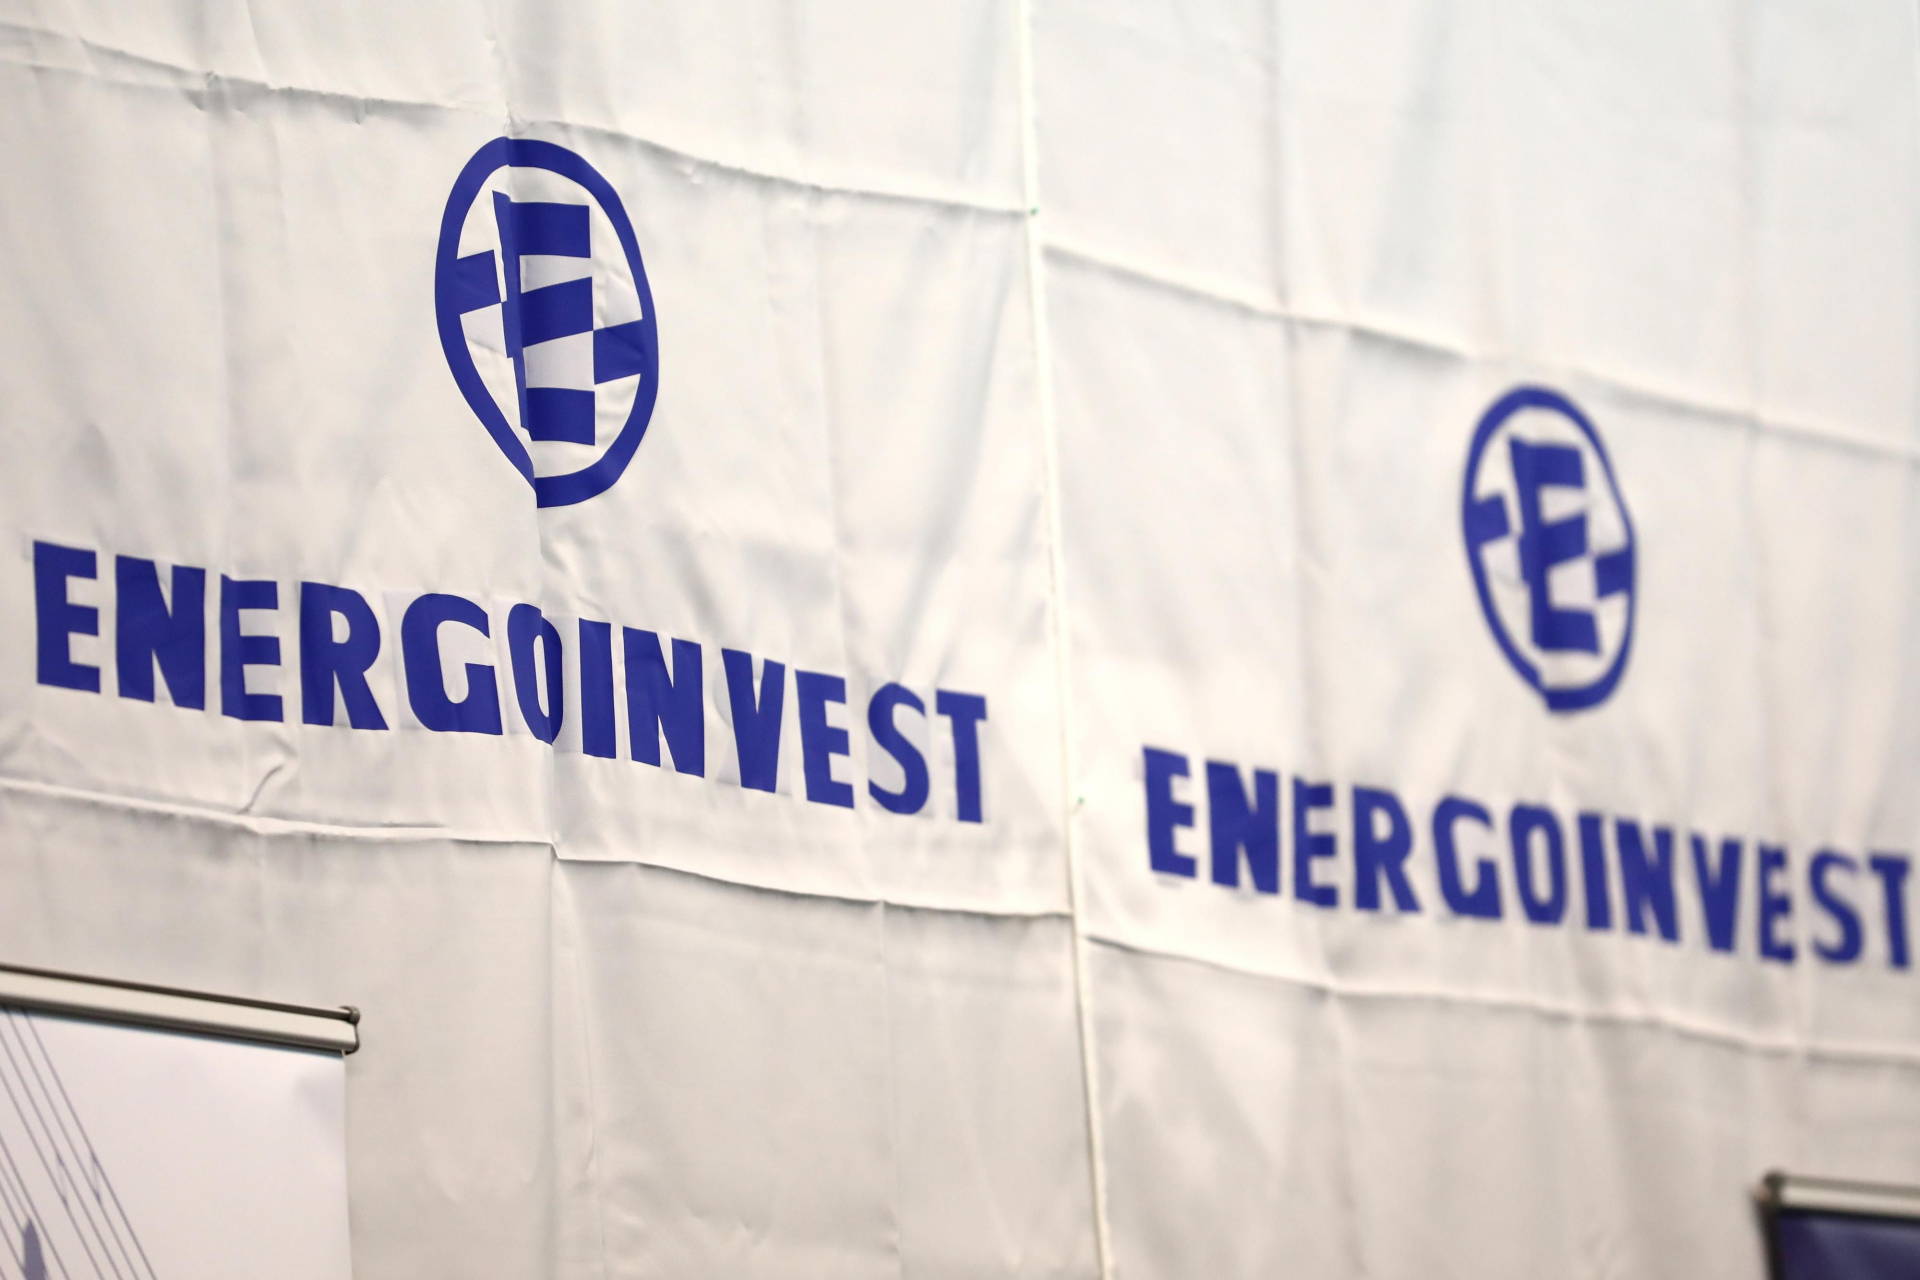 energoinvest-logo-armin-durgut-pixsell.jpg